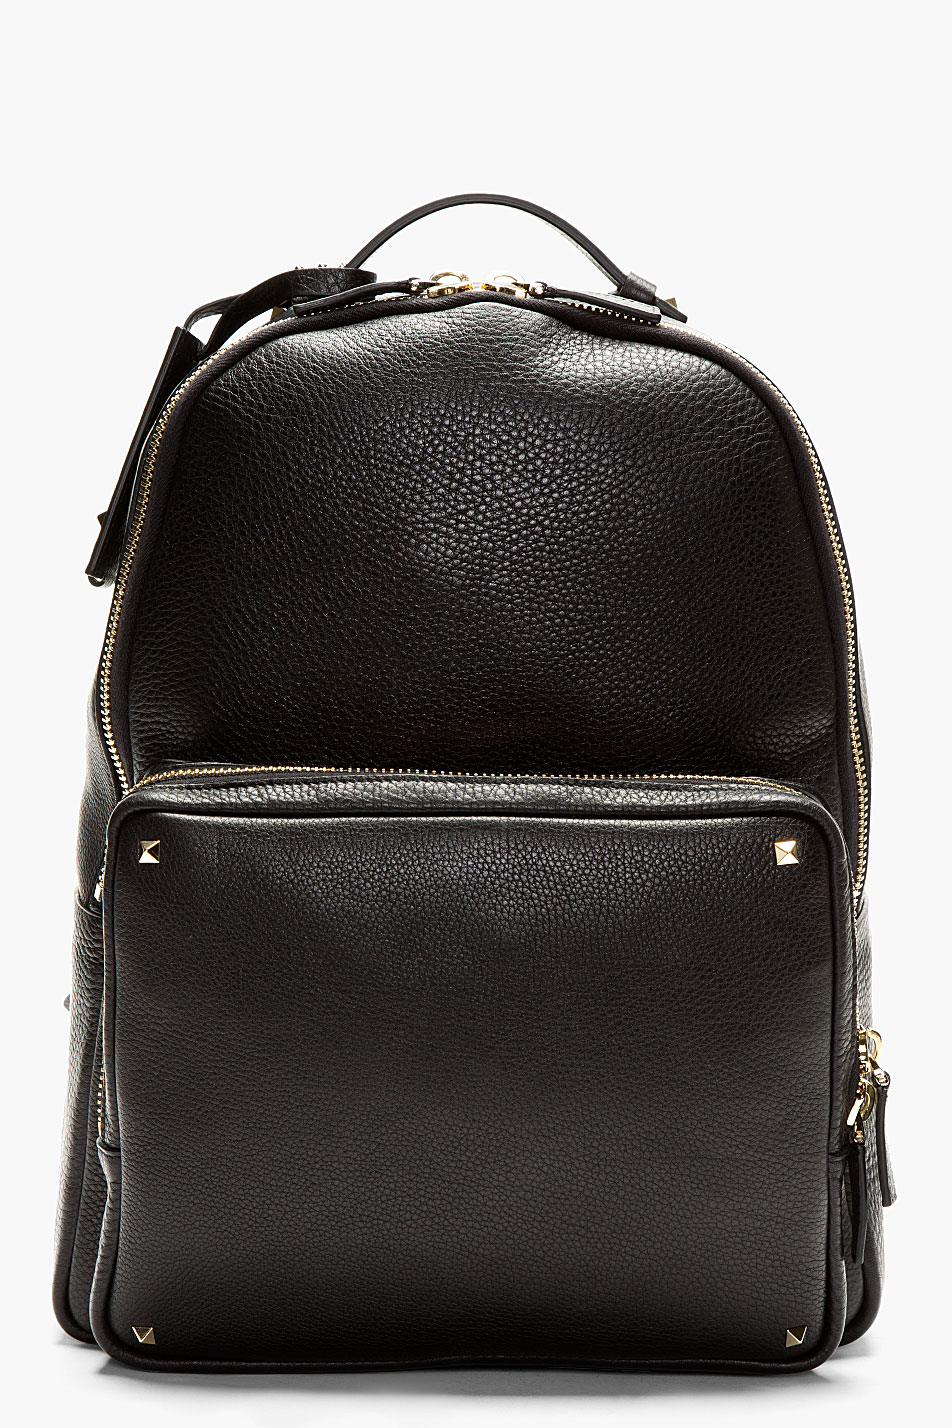 Valentino Black Pebbled Leather Backpack in Black for Men | Lyst